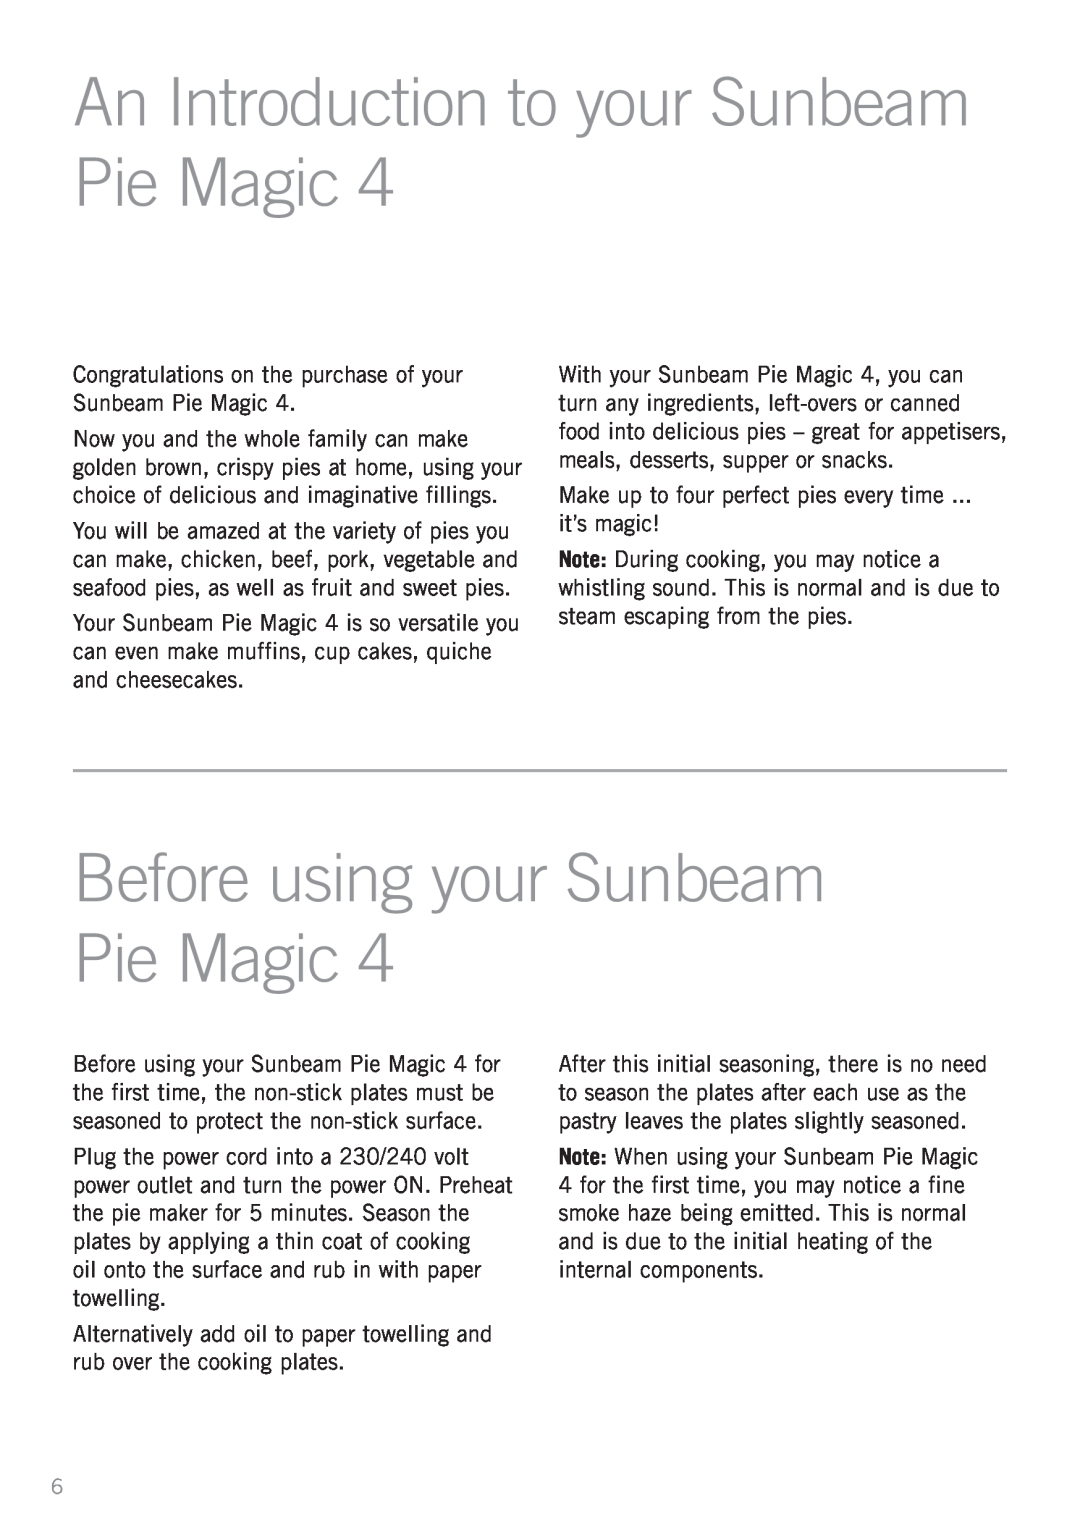 Sunbeam Pie Magic 4 manual An Introduction to your Sunbeam Pie Magic, Before using your Sunbeam Pie Magic 